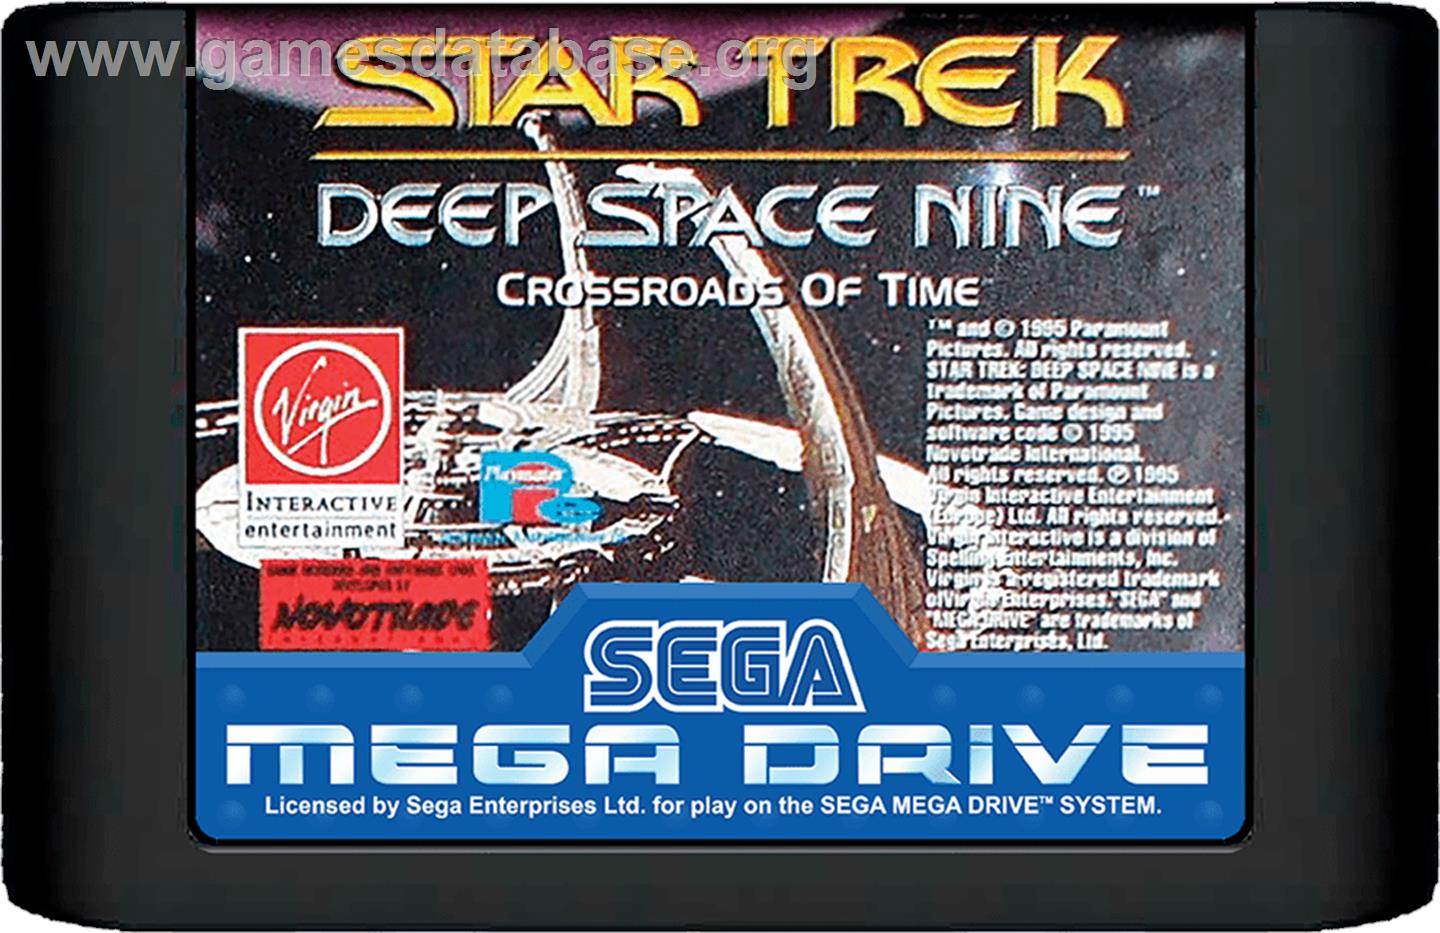 Star Trek Deep Space Nine - Crossroads of Time - Sega Genesis - Artwork - Cartridge